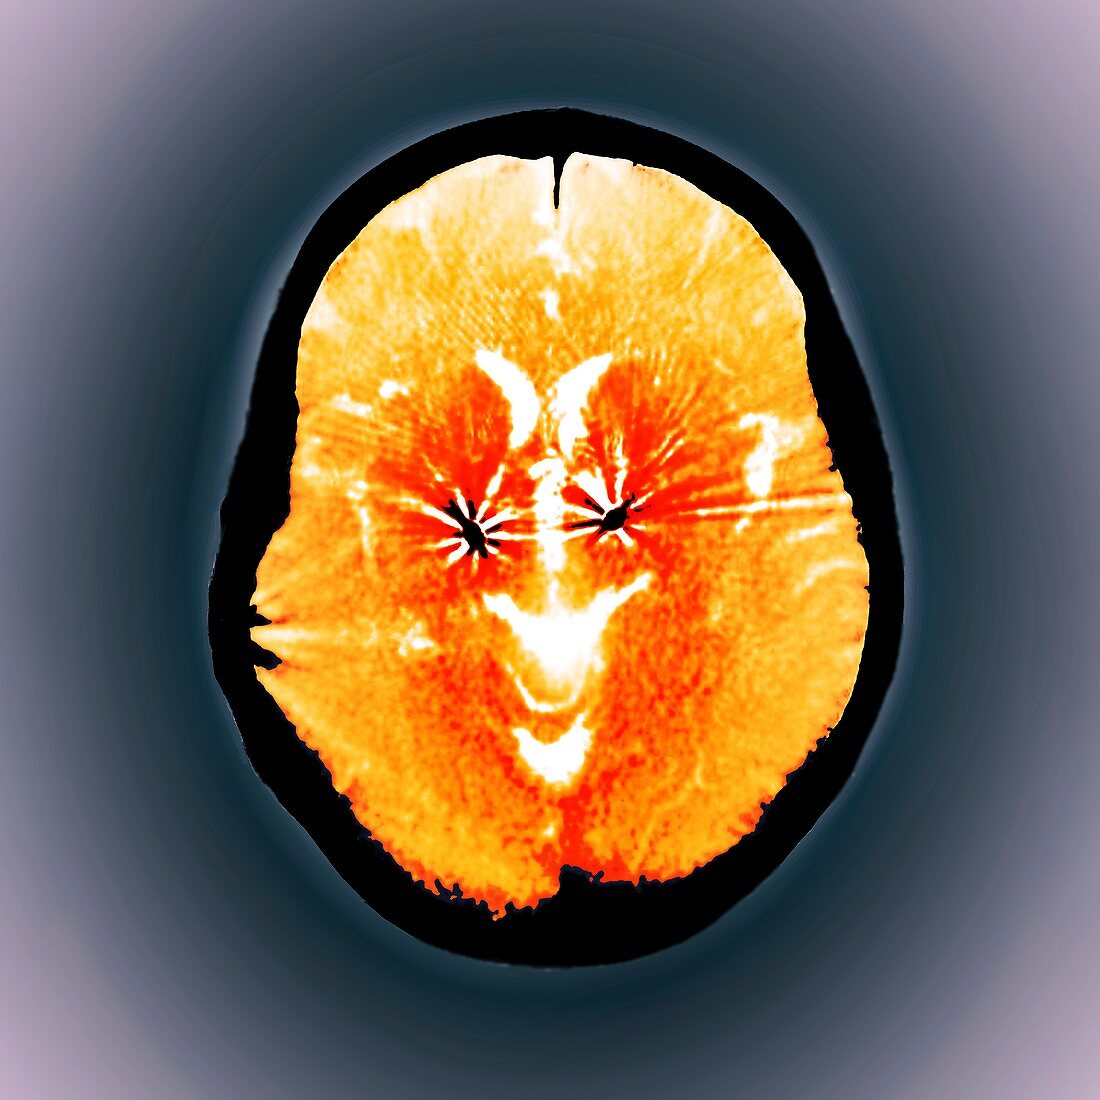 Parkinson's brain pacemaker,CT scan